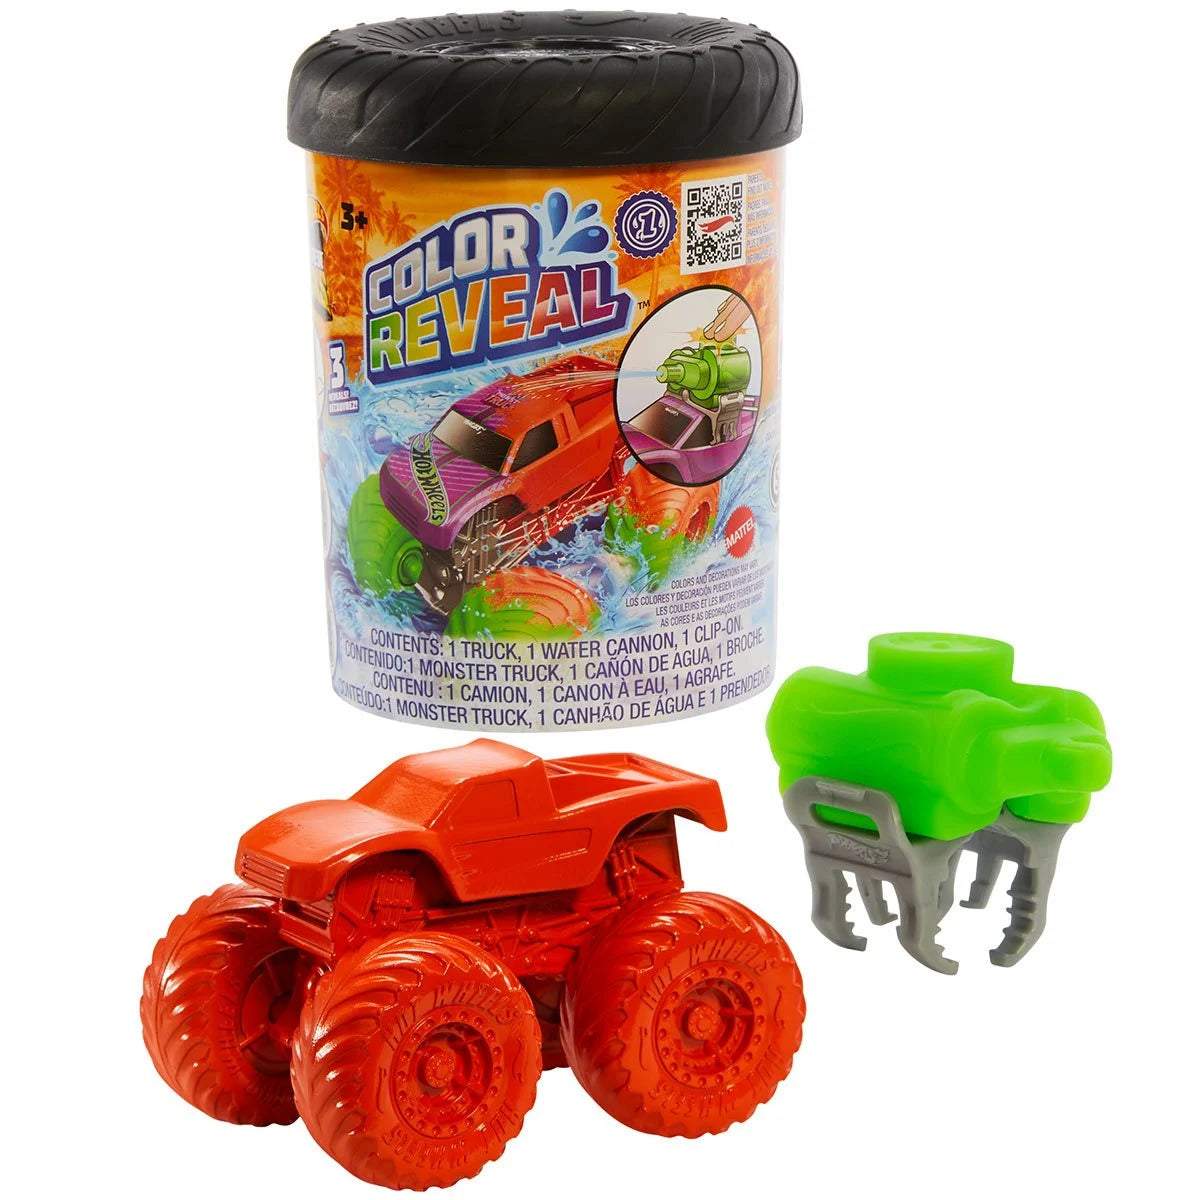 Mattel-Hot Wheels Monster Trucks Color Reveal Truck-HJF39-Legacy Toys